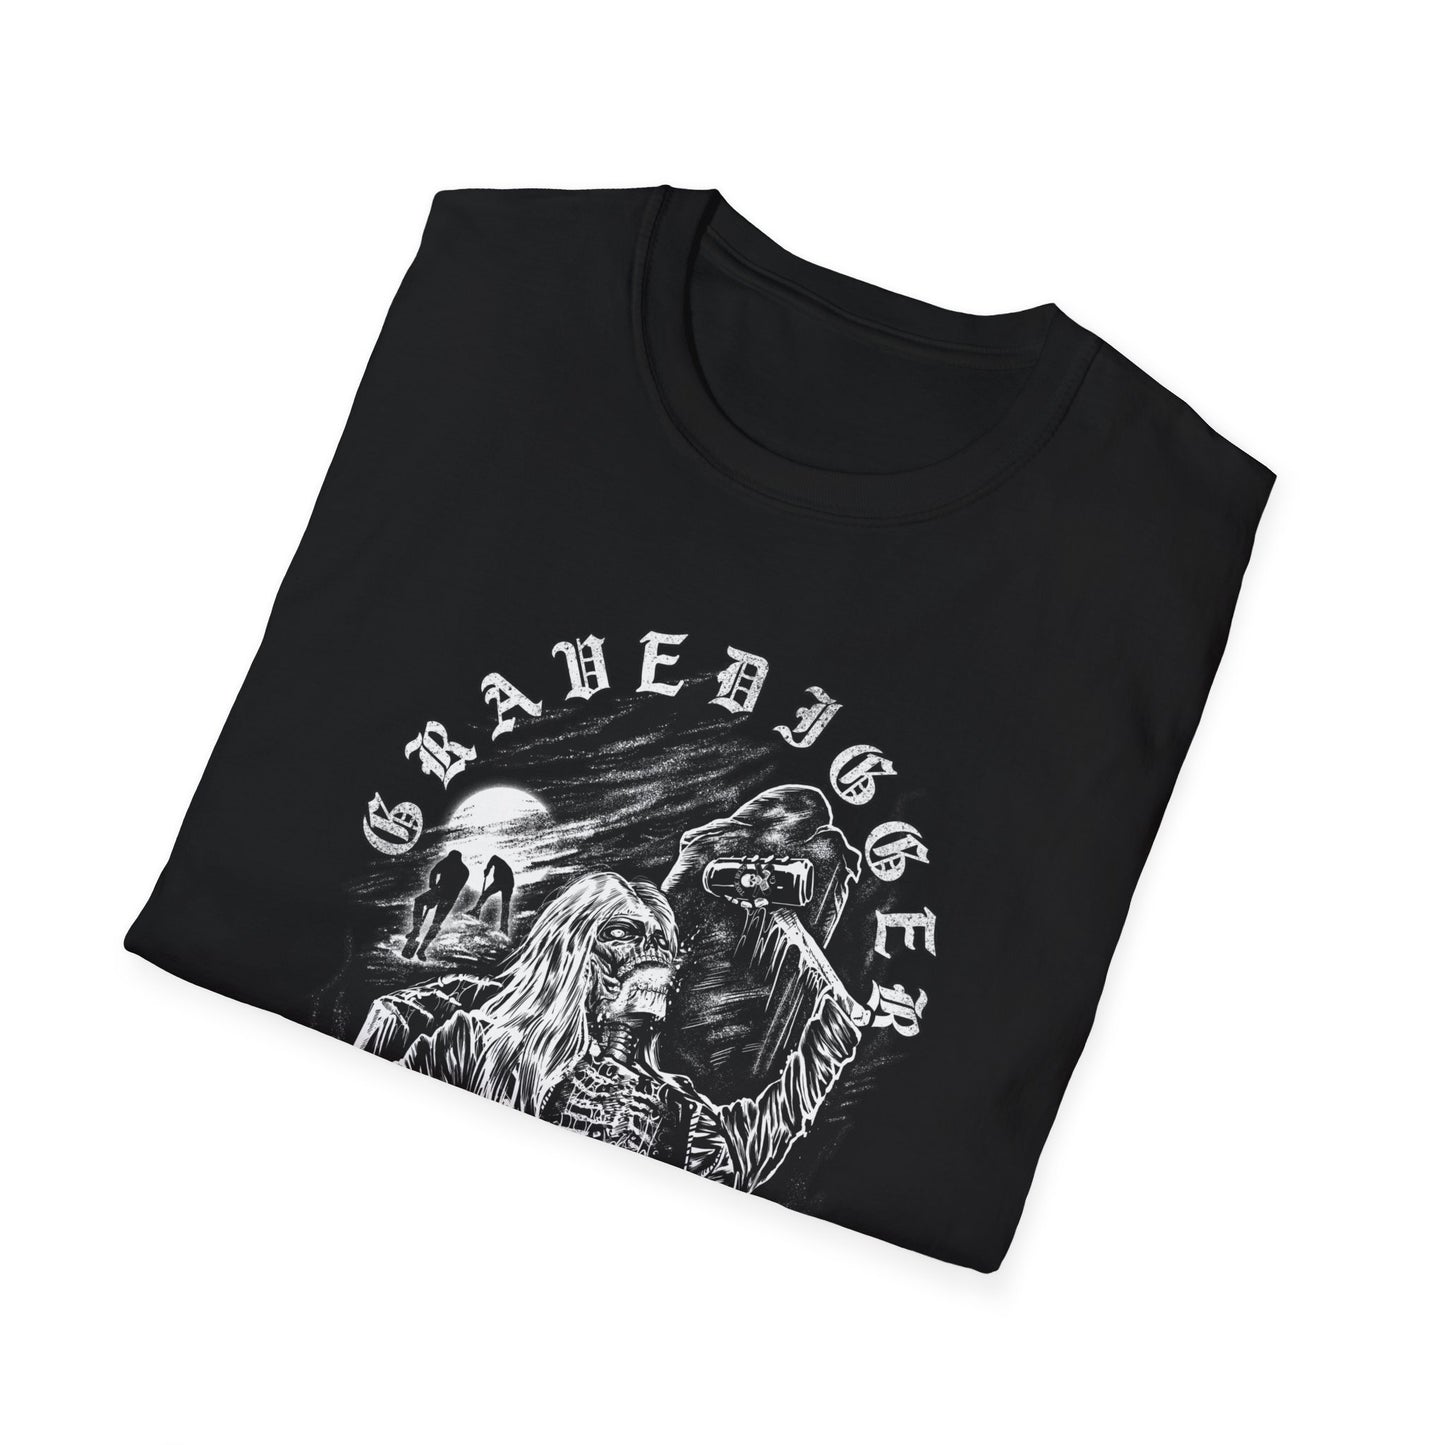 Gravedigger Catacomb X Toxic Brewery Collab T-shirt